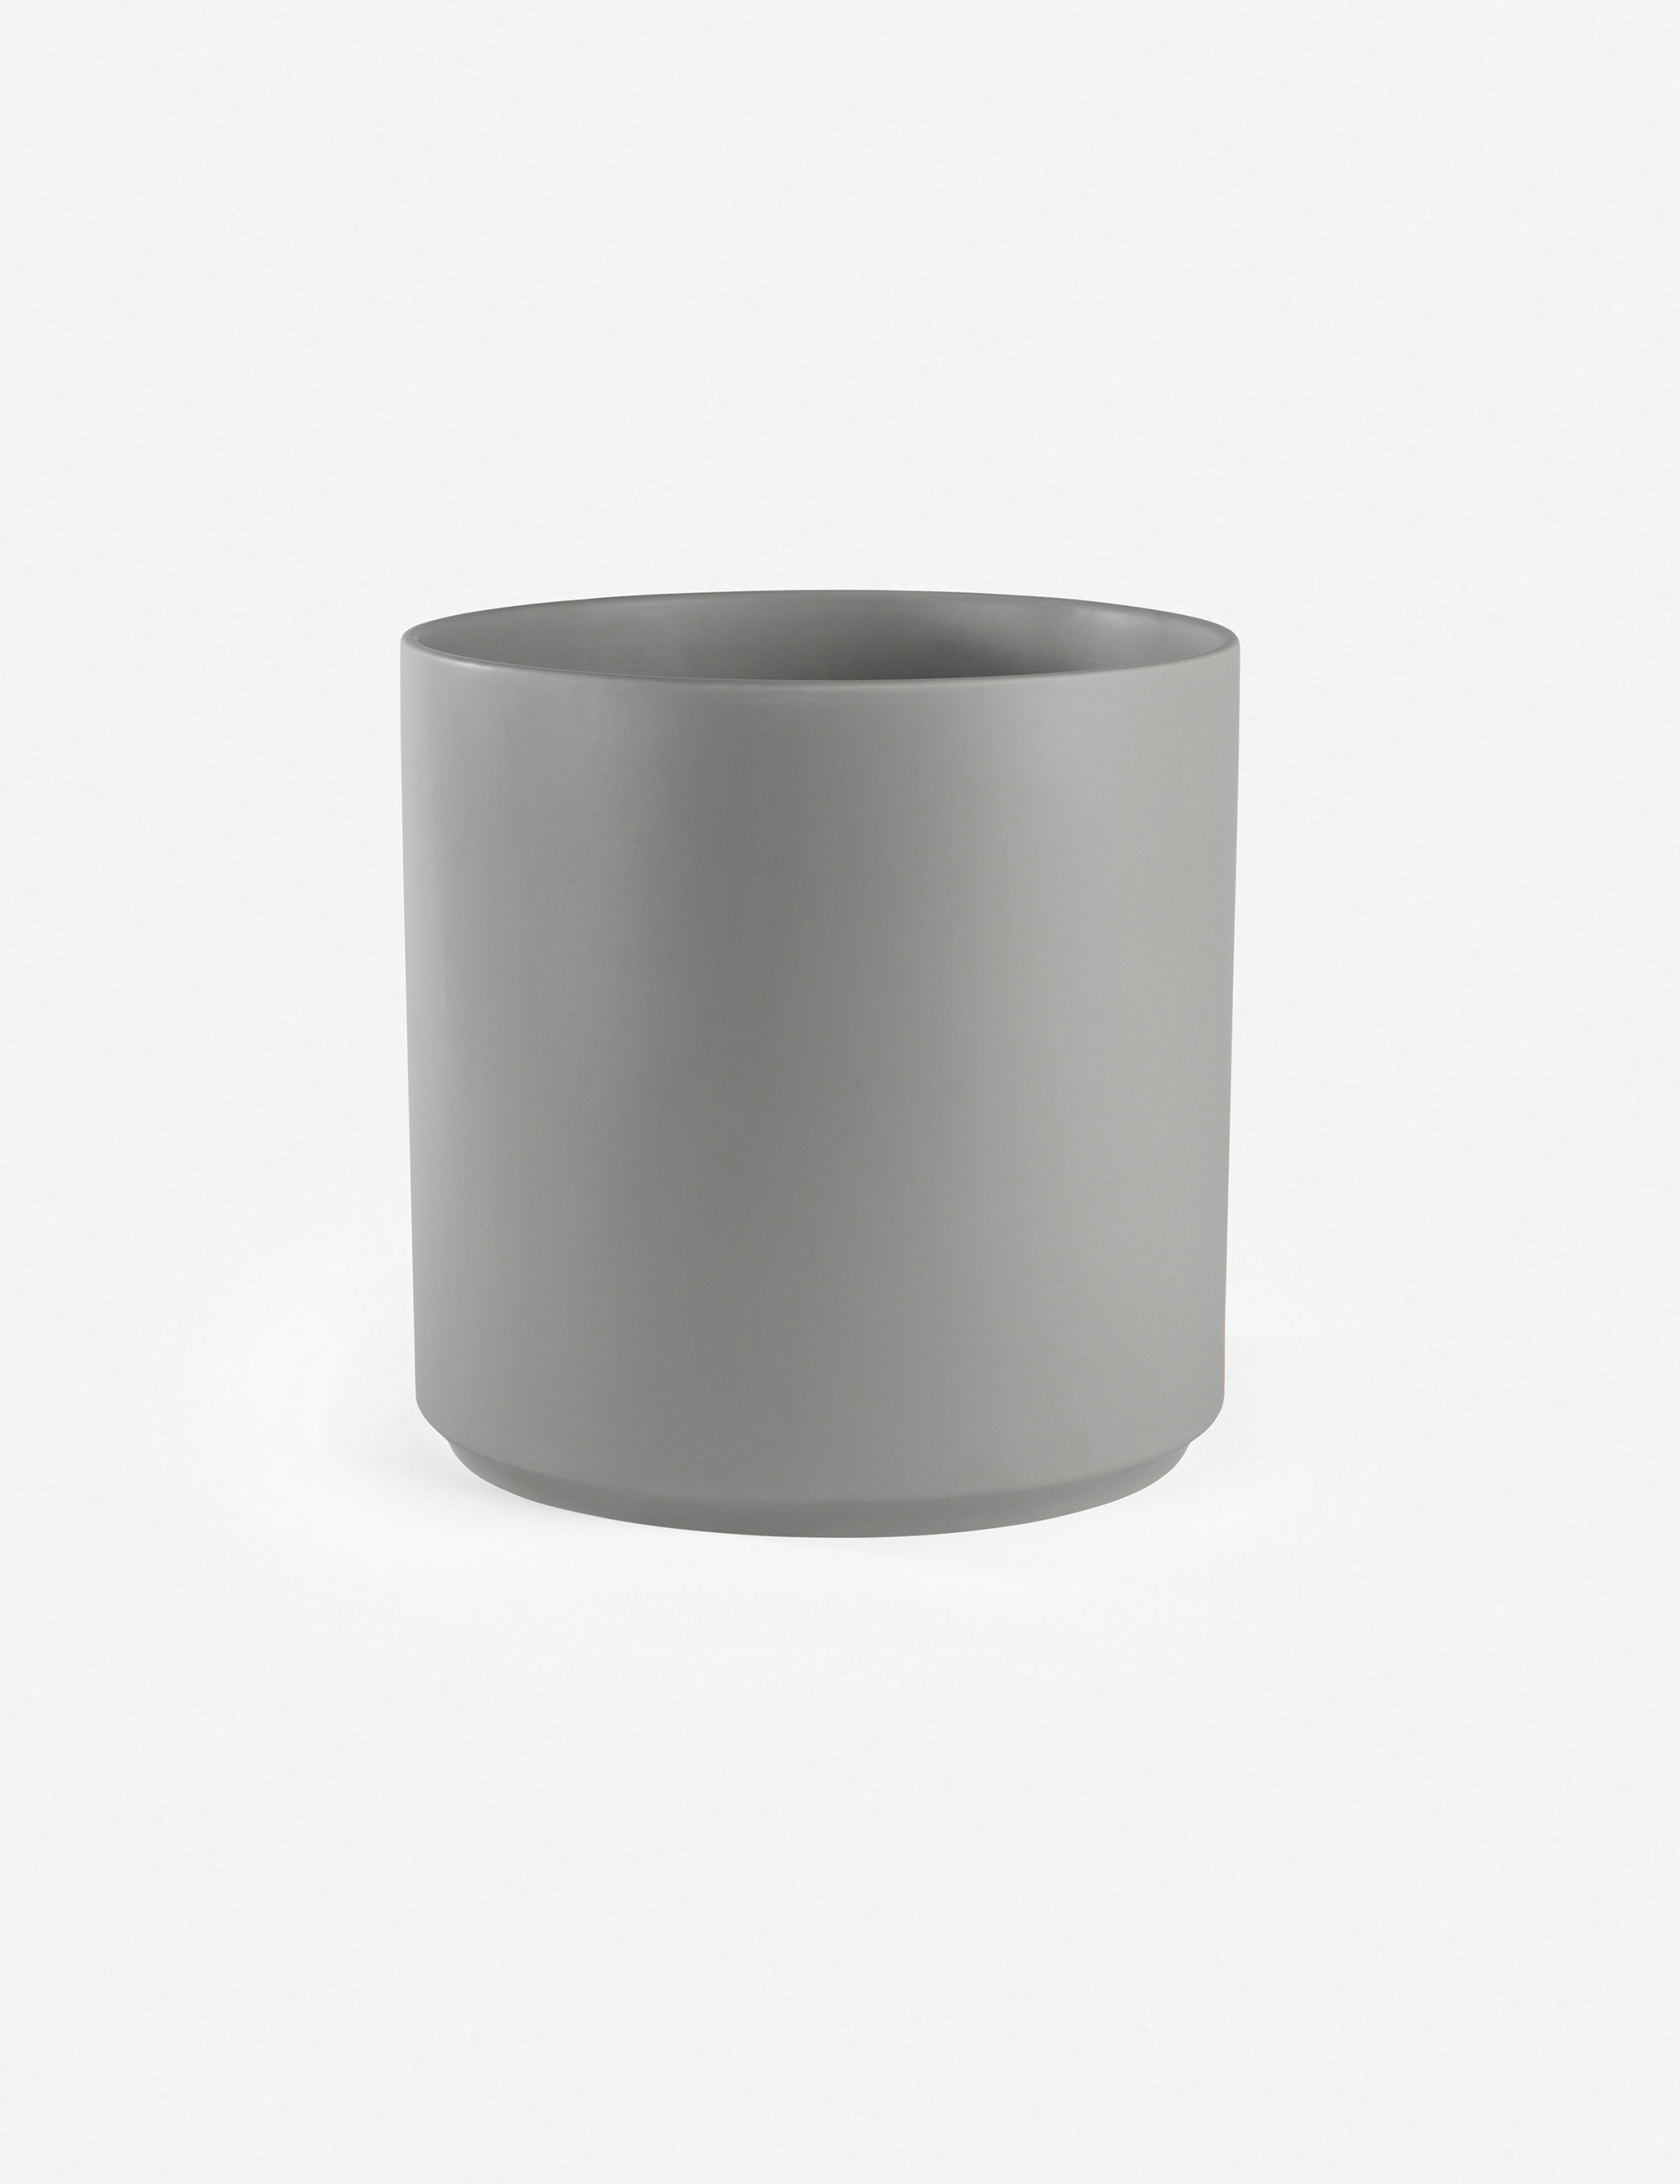 Ceramic Planter Pot by LBE Design - Image 5